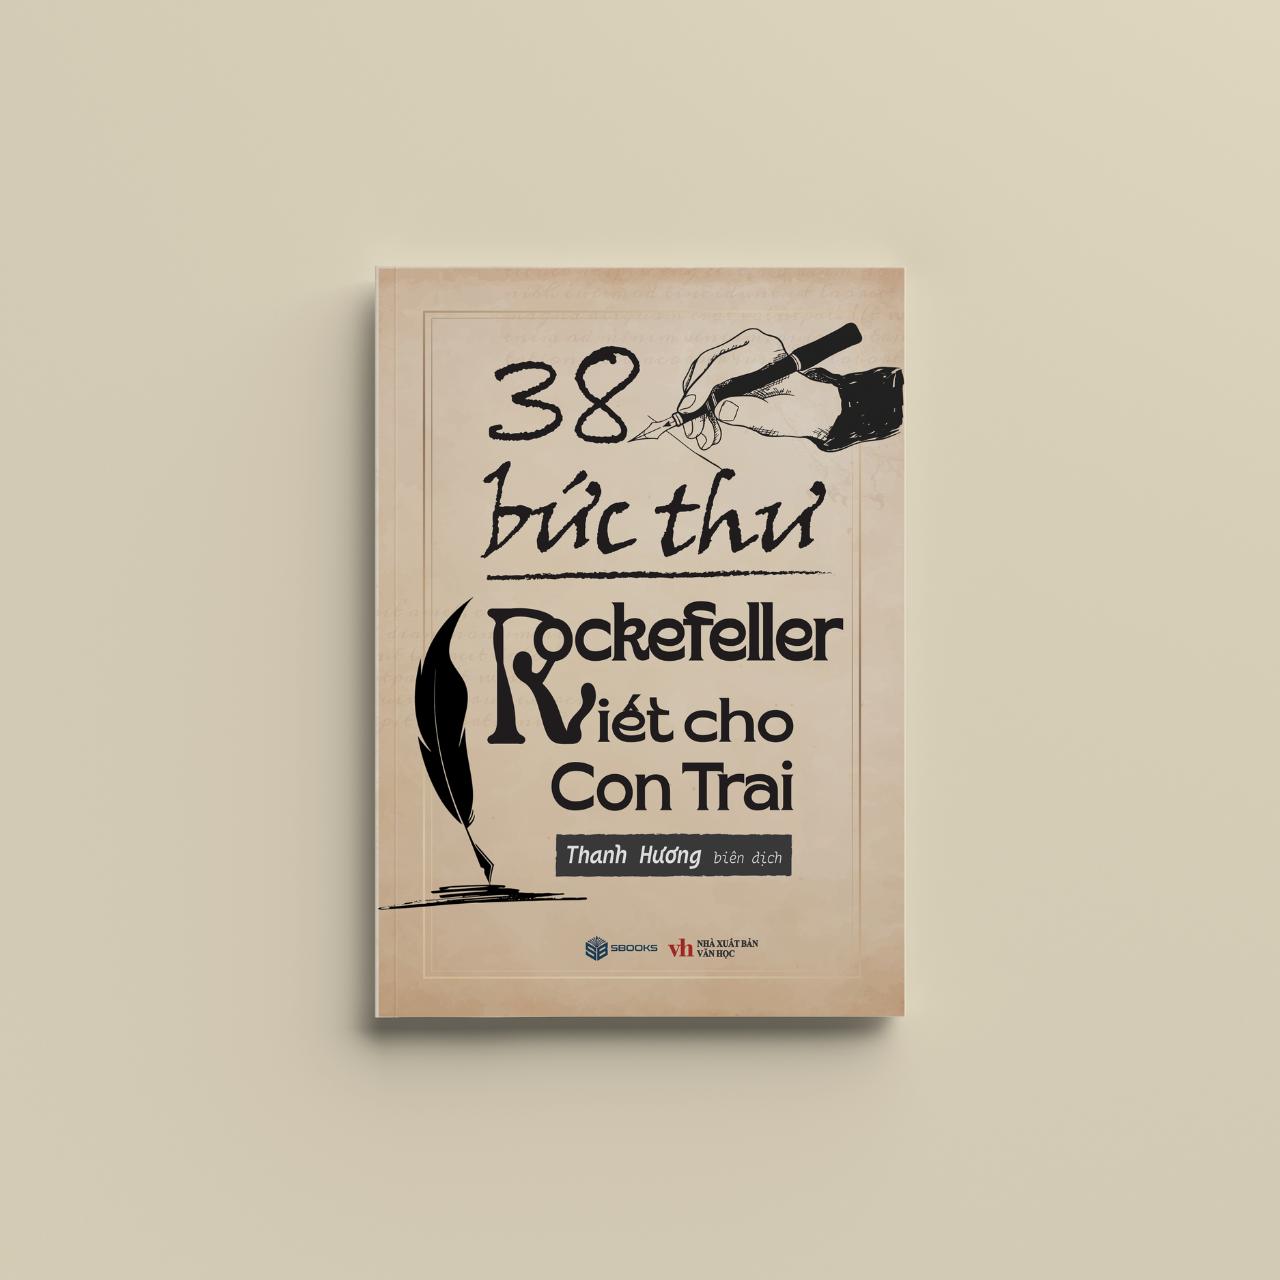 Sách - 38 Bức Thư Rockefeller Gửi Cho Con Trai - SBOOKS